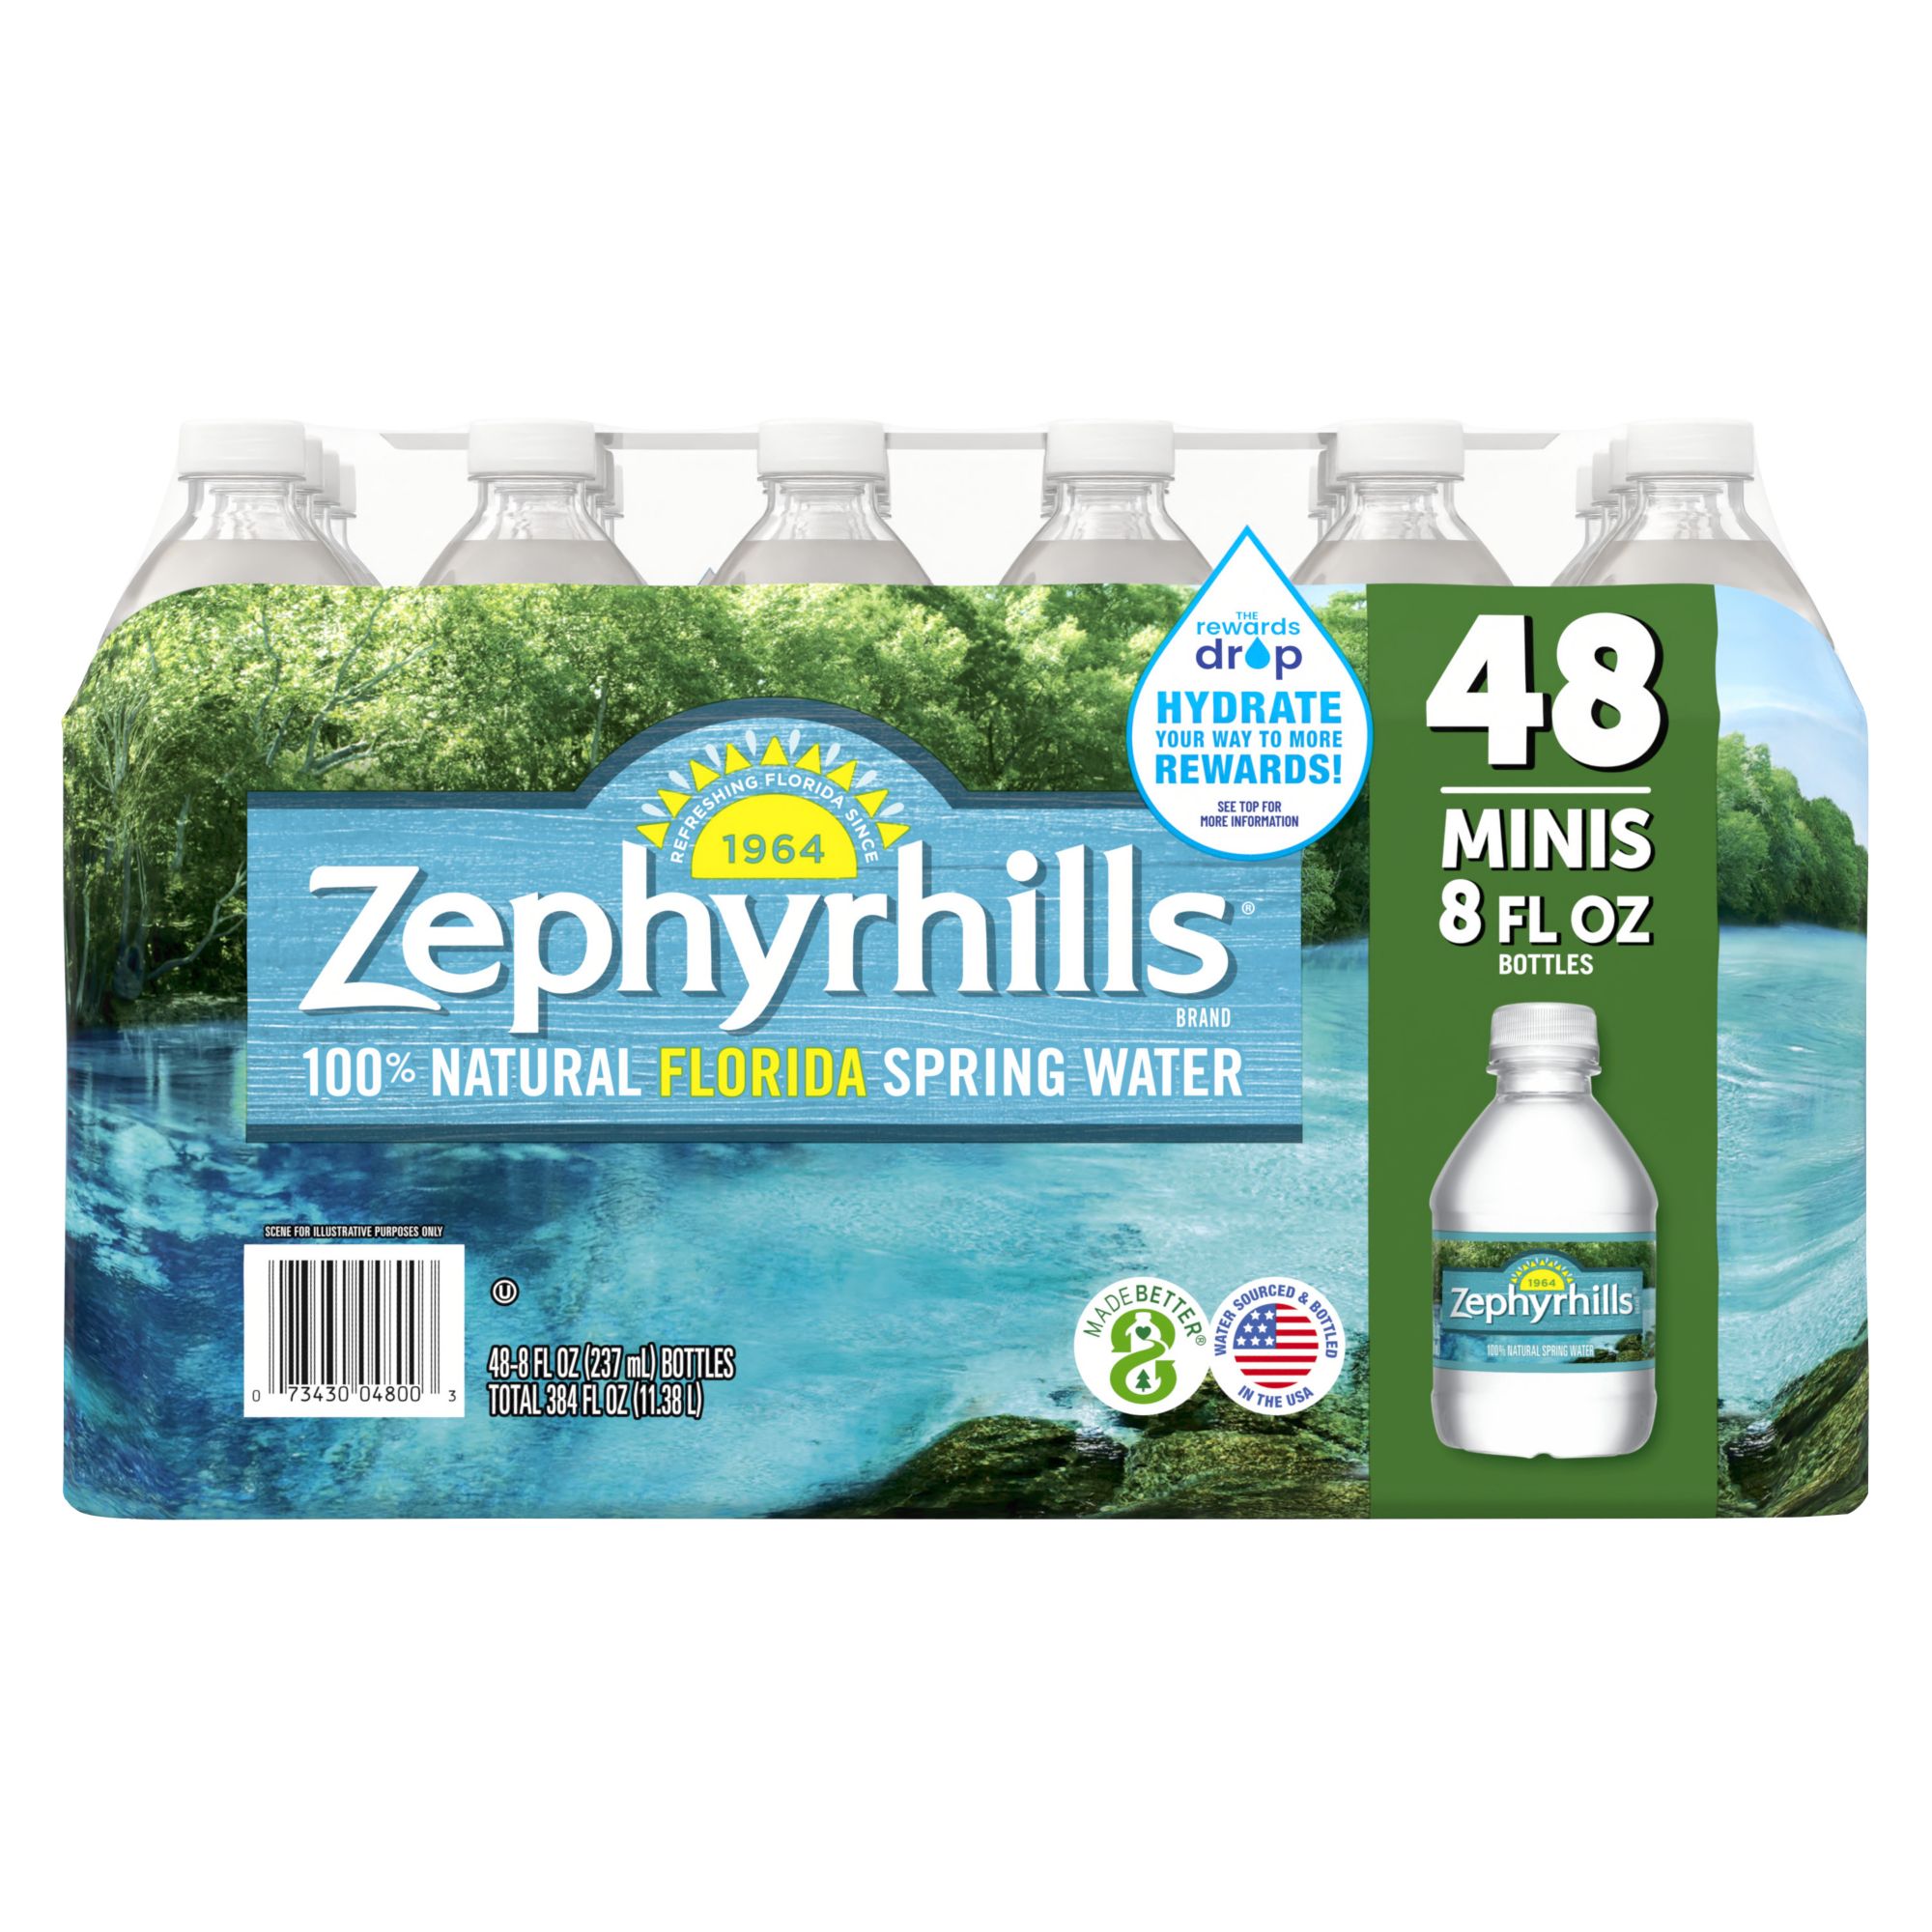 Ten with Electrolytes Spring Water, 33.8 fl oz